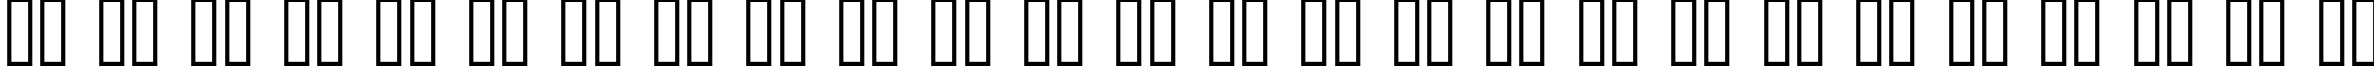 Пример написания английского алфавита шрифтом Shruti